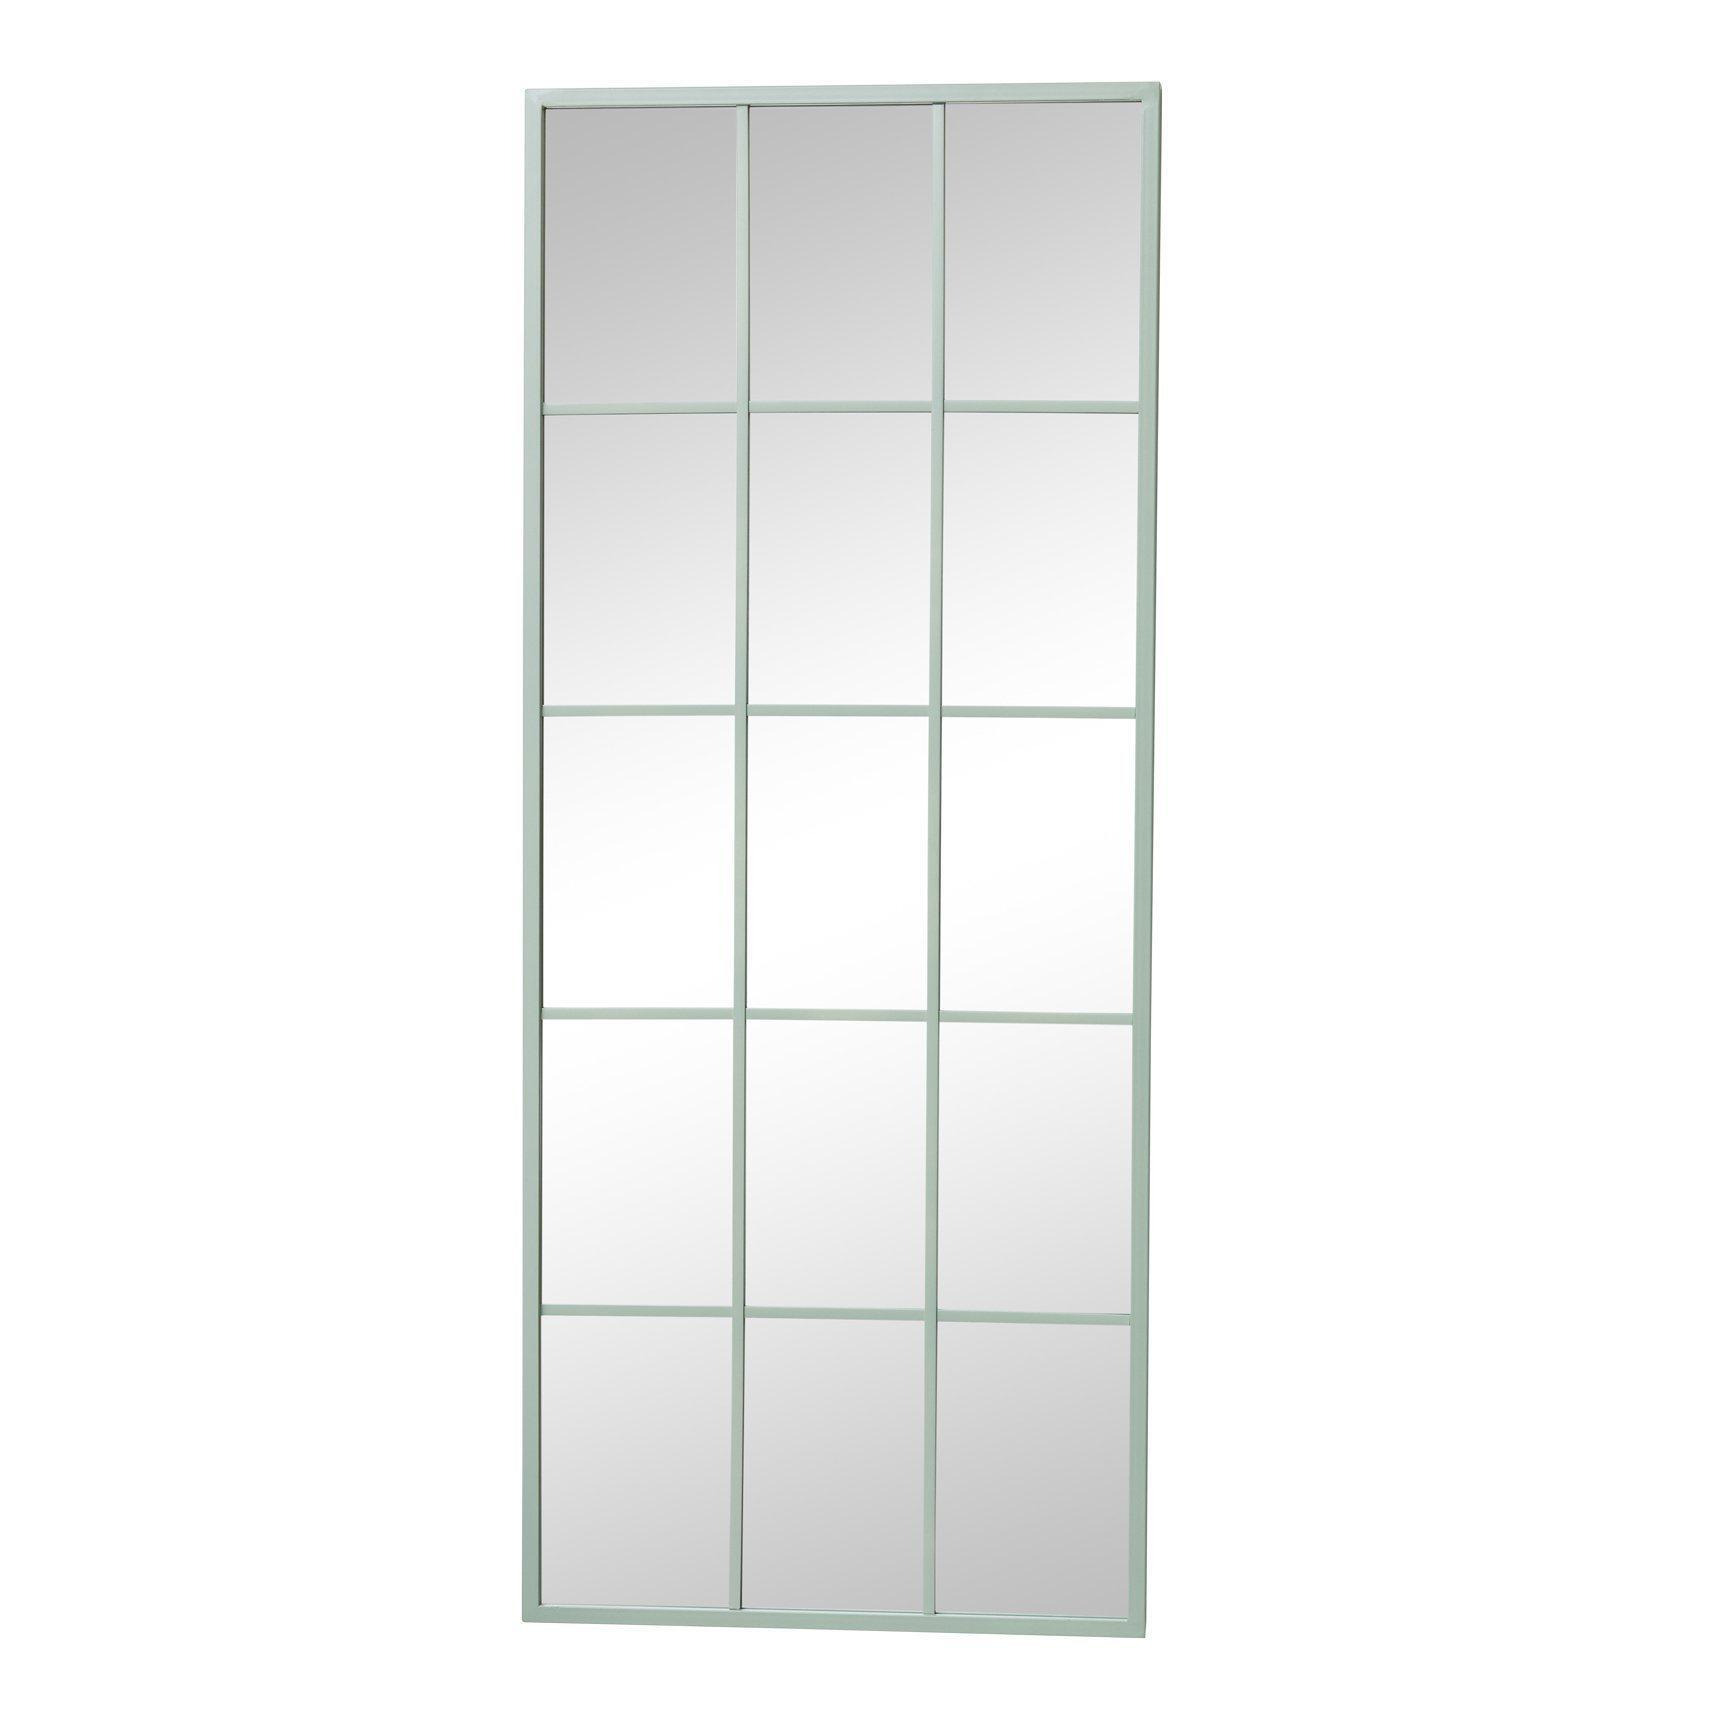 Extra Large Sage Green Window Mirror 144cm X 59cm - image 1